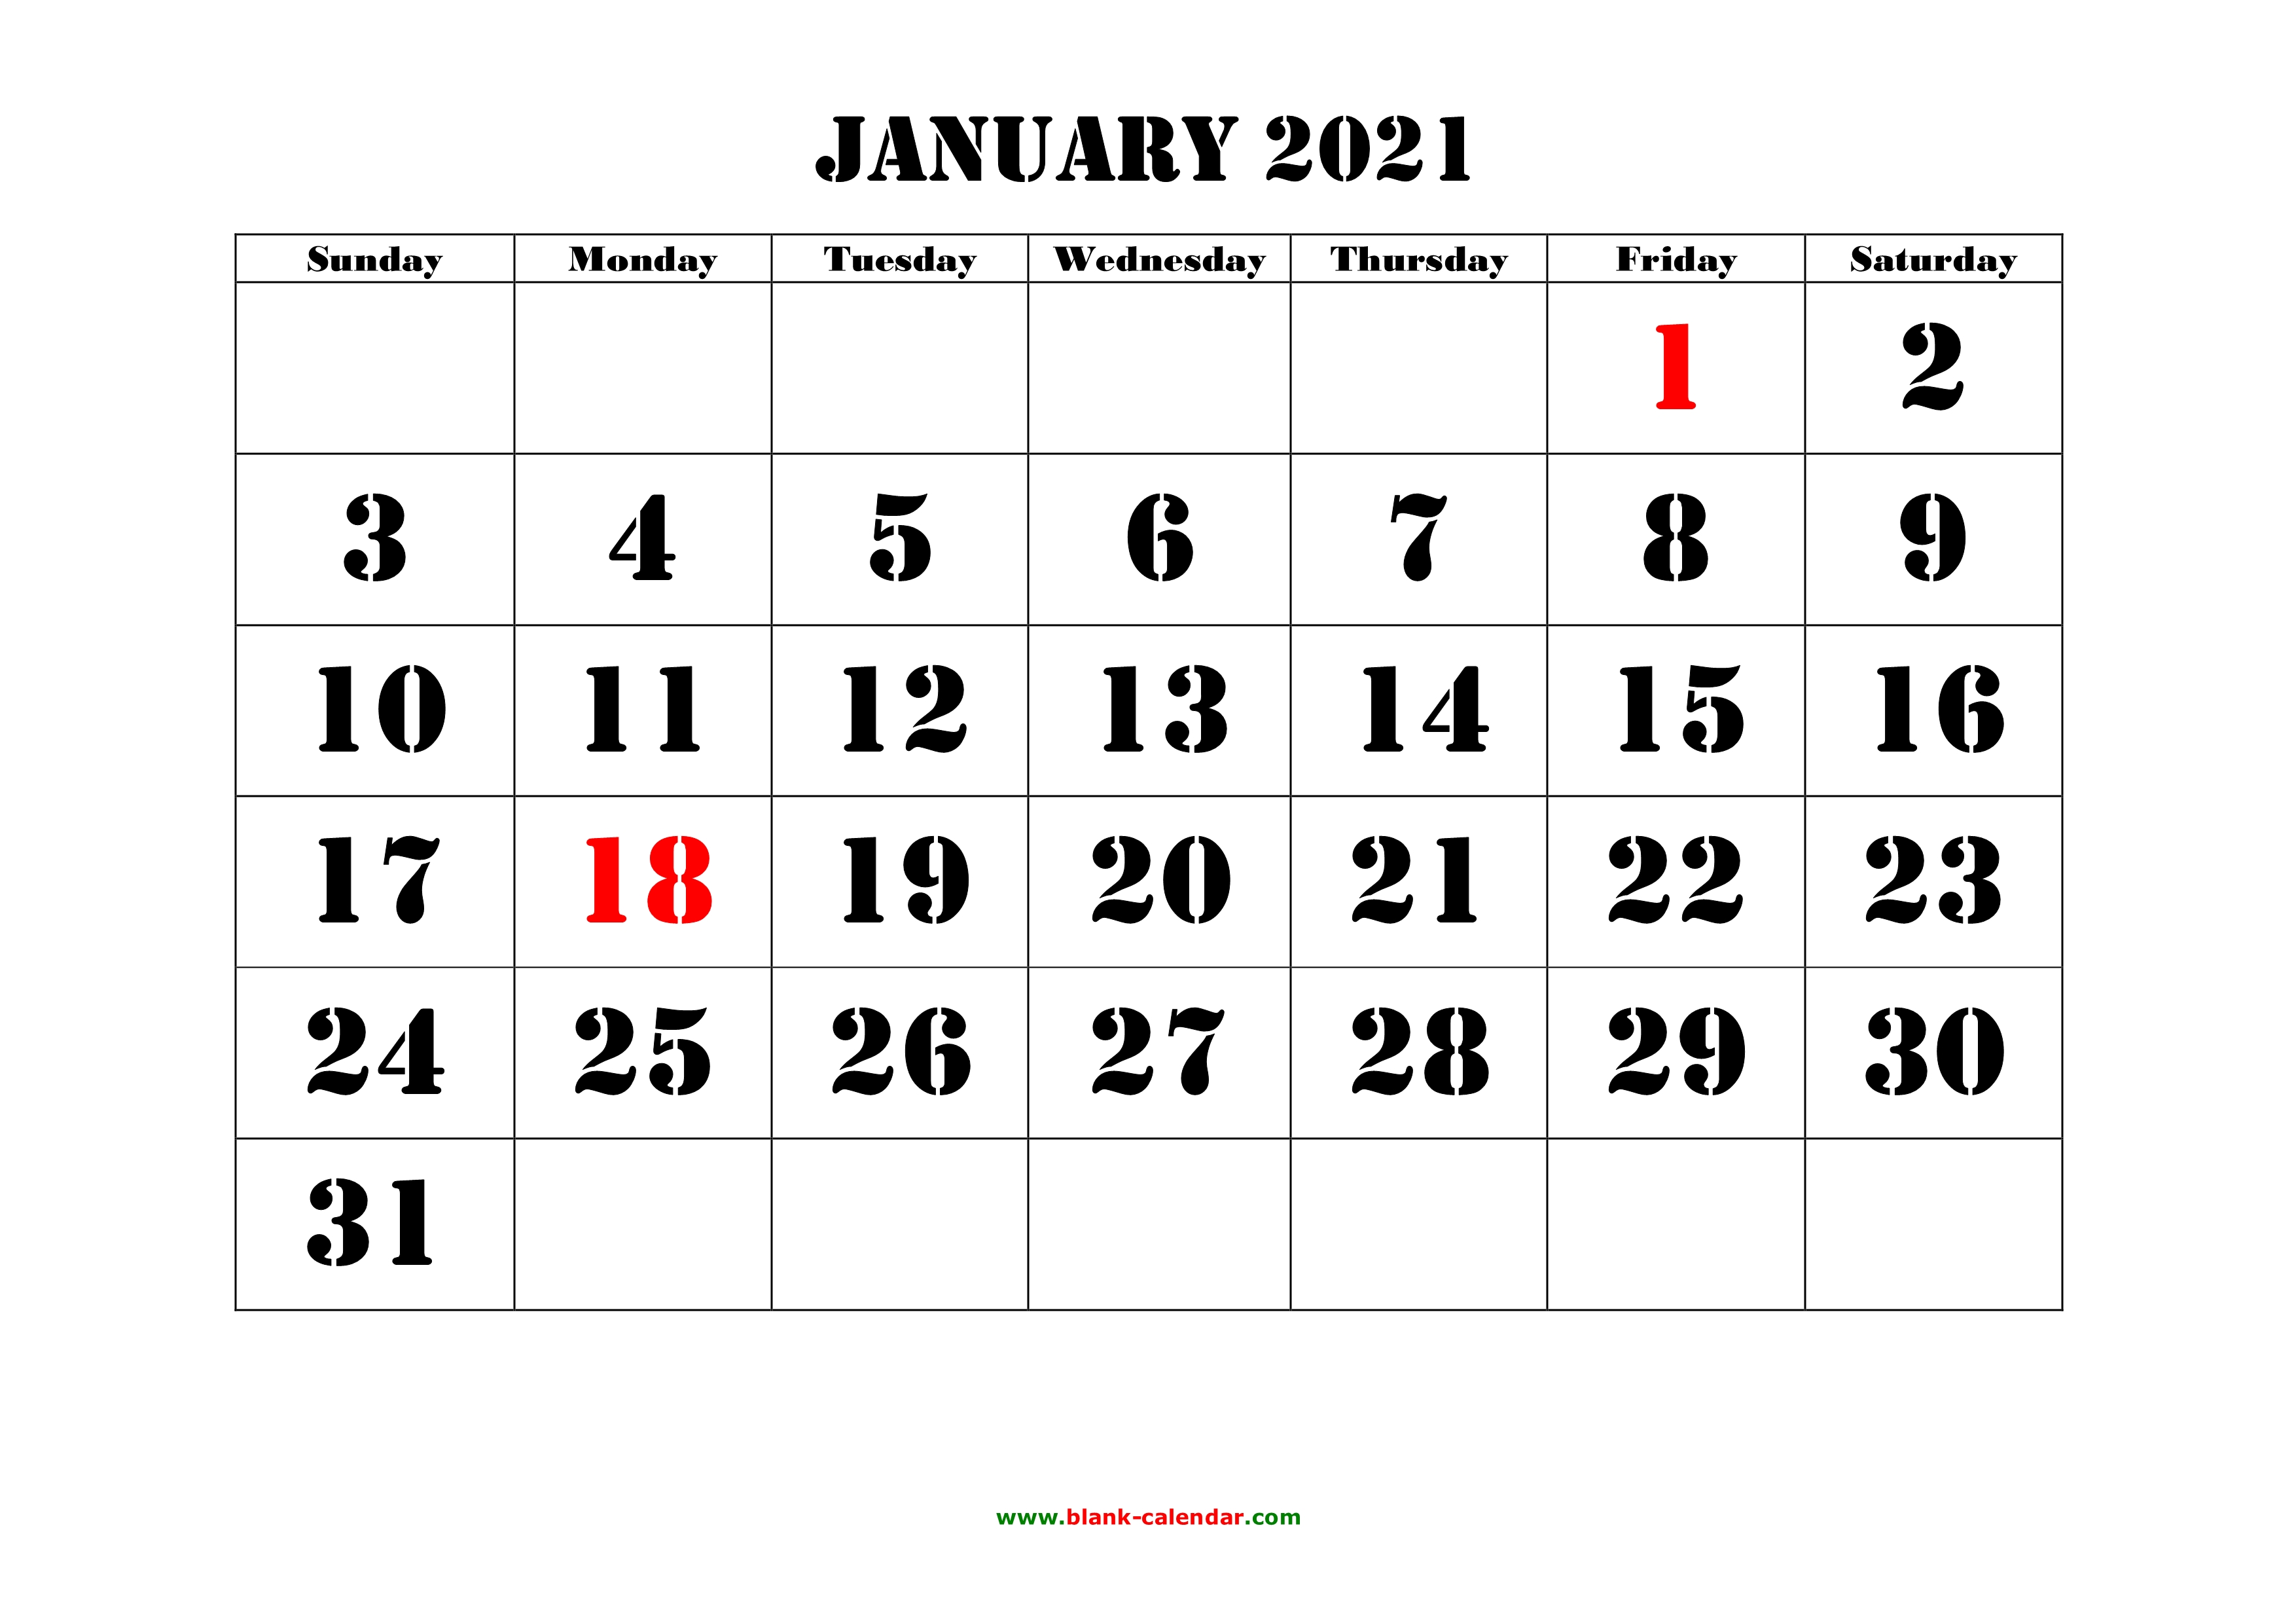 large-print-january-2021-calendar-images-and-photos-finder